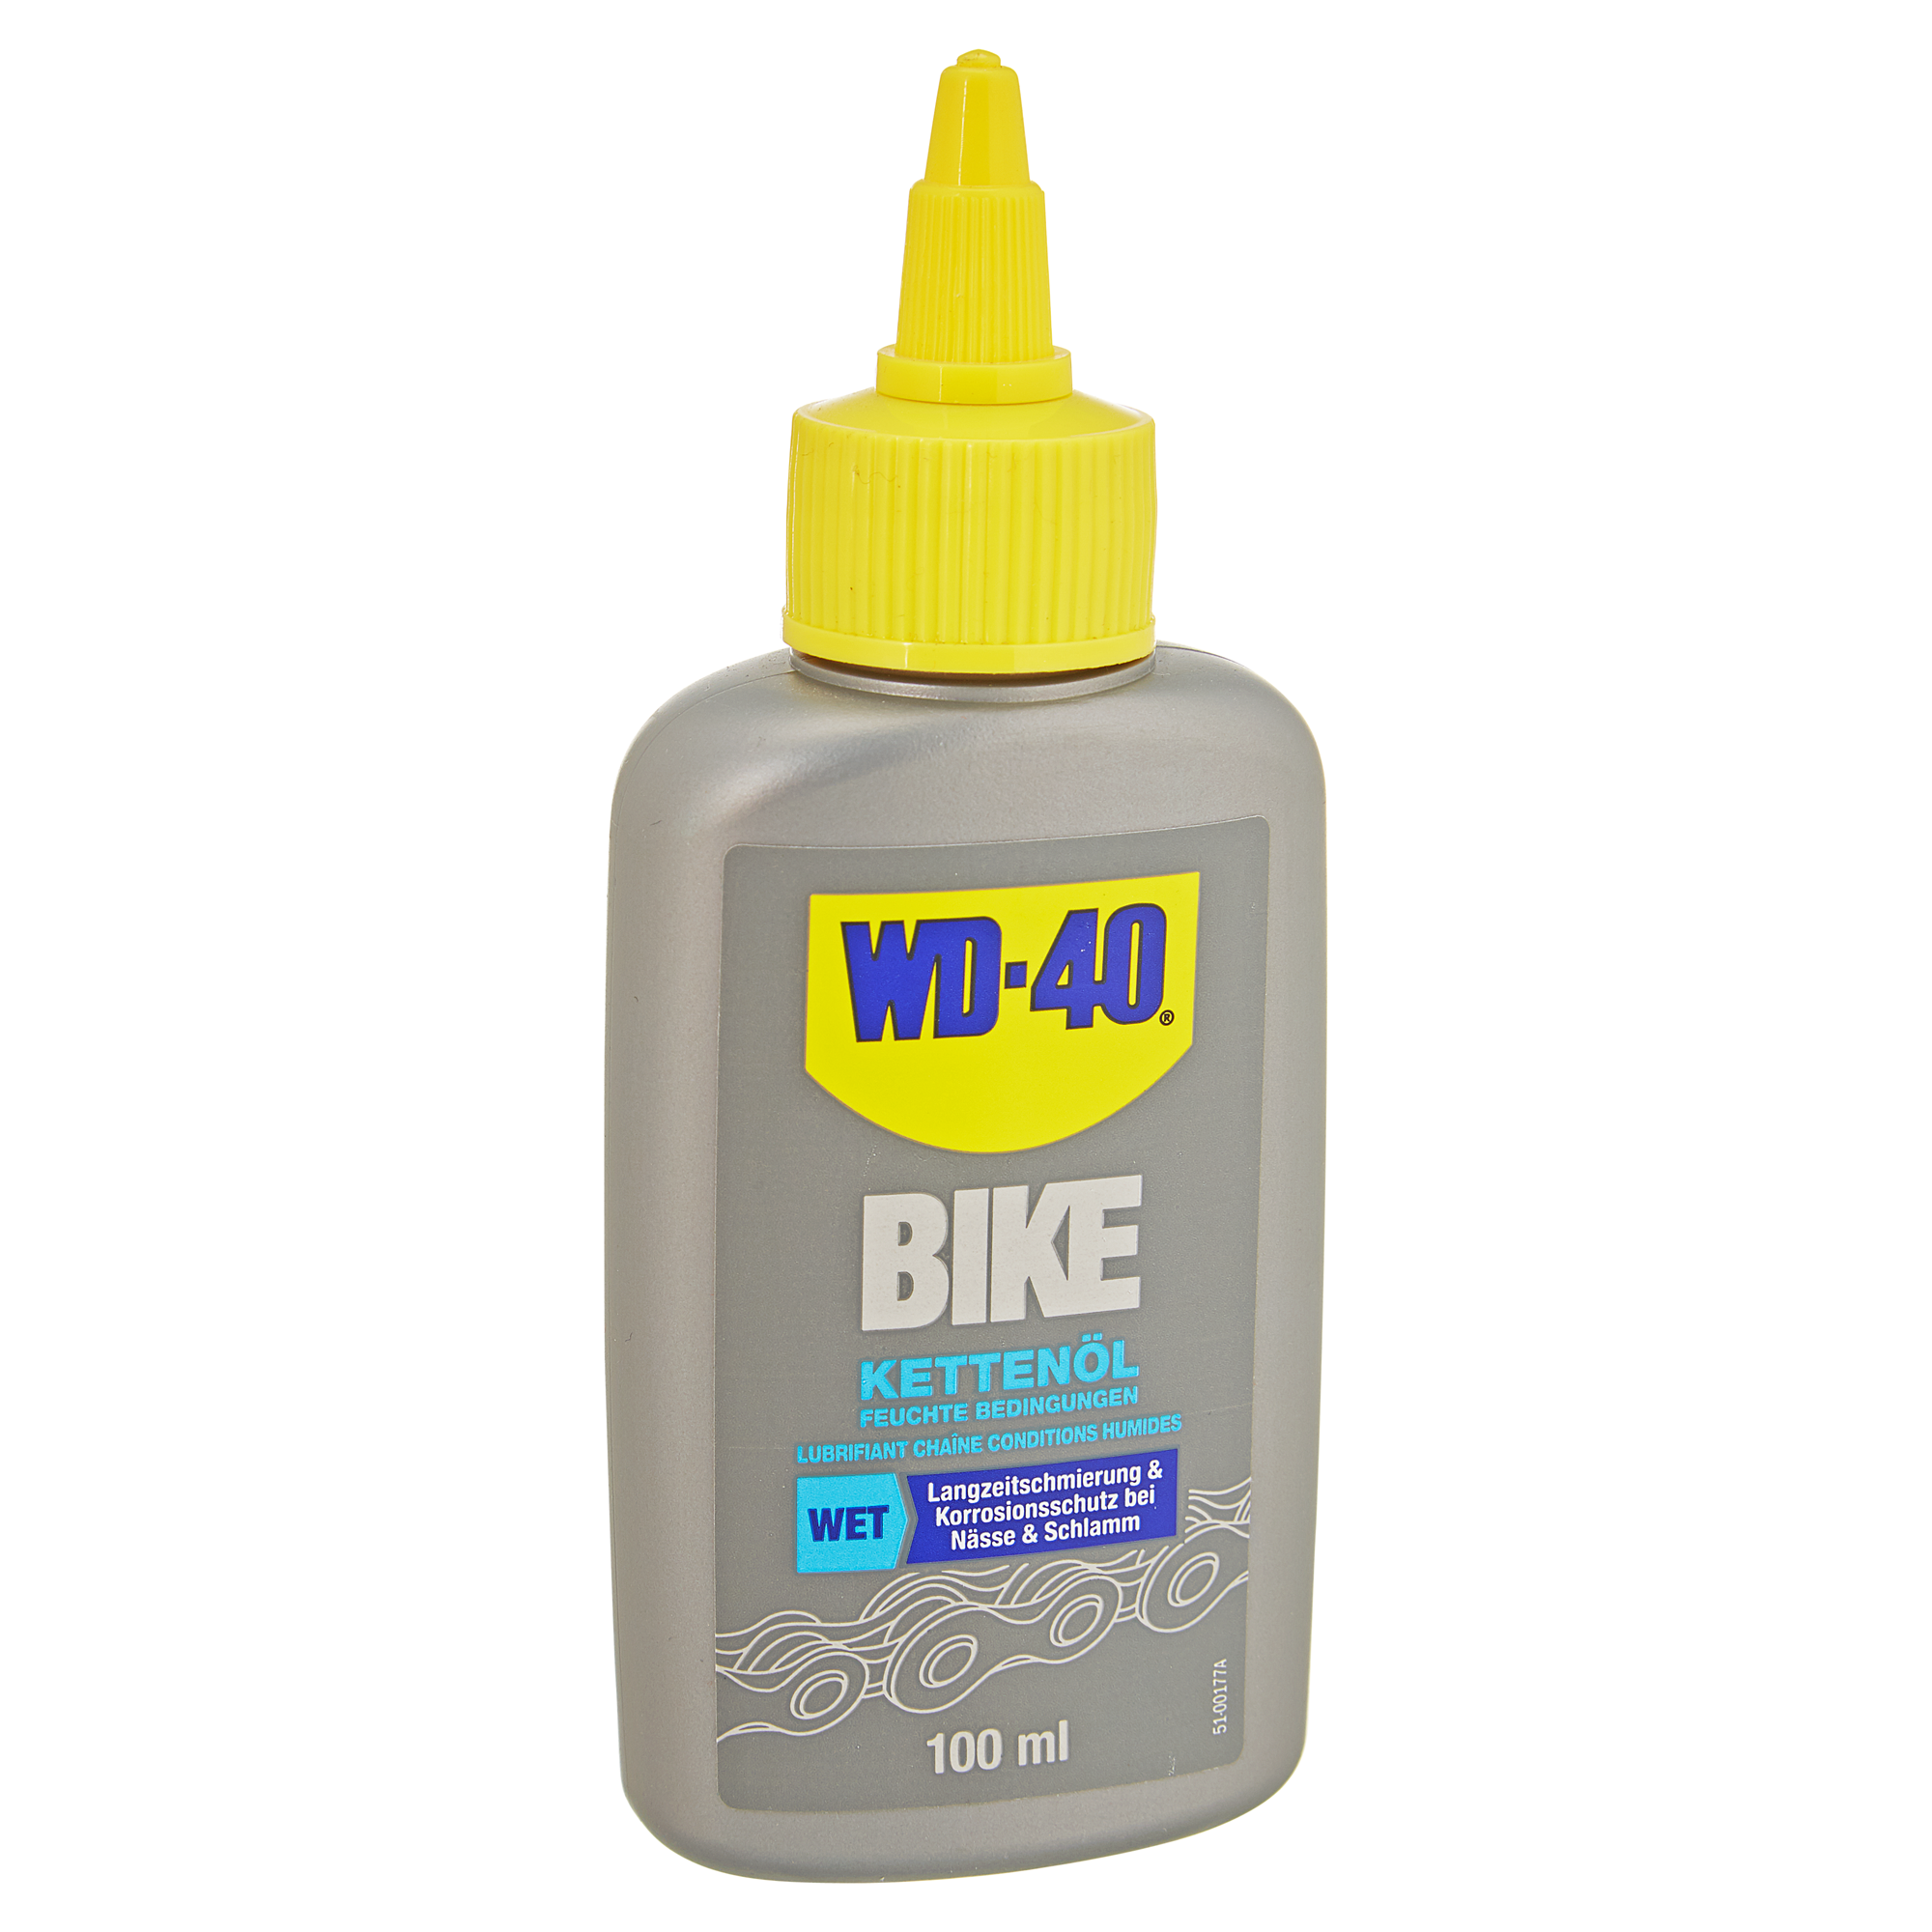 Kettenöl BIKE WD-40 100 ml + product picture